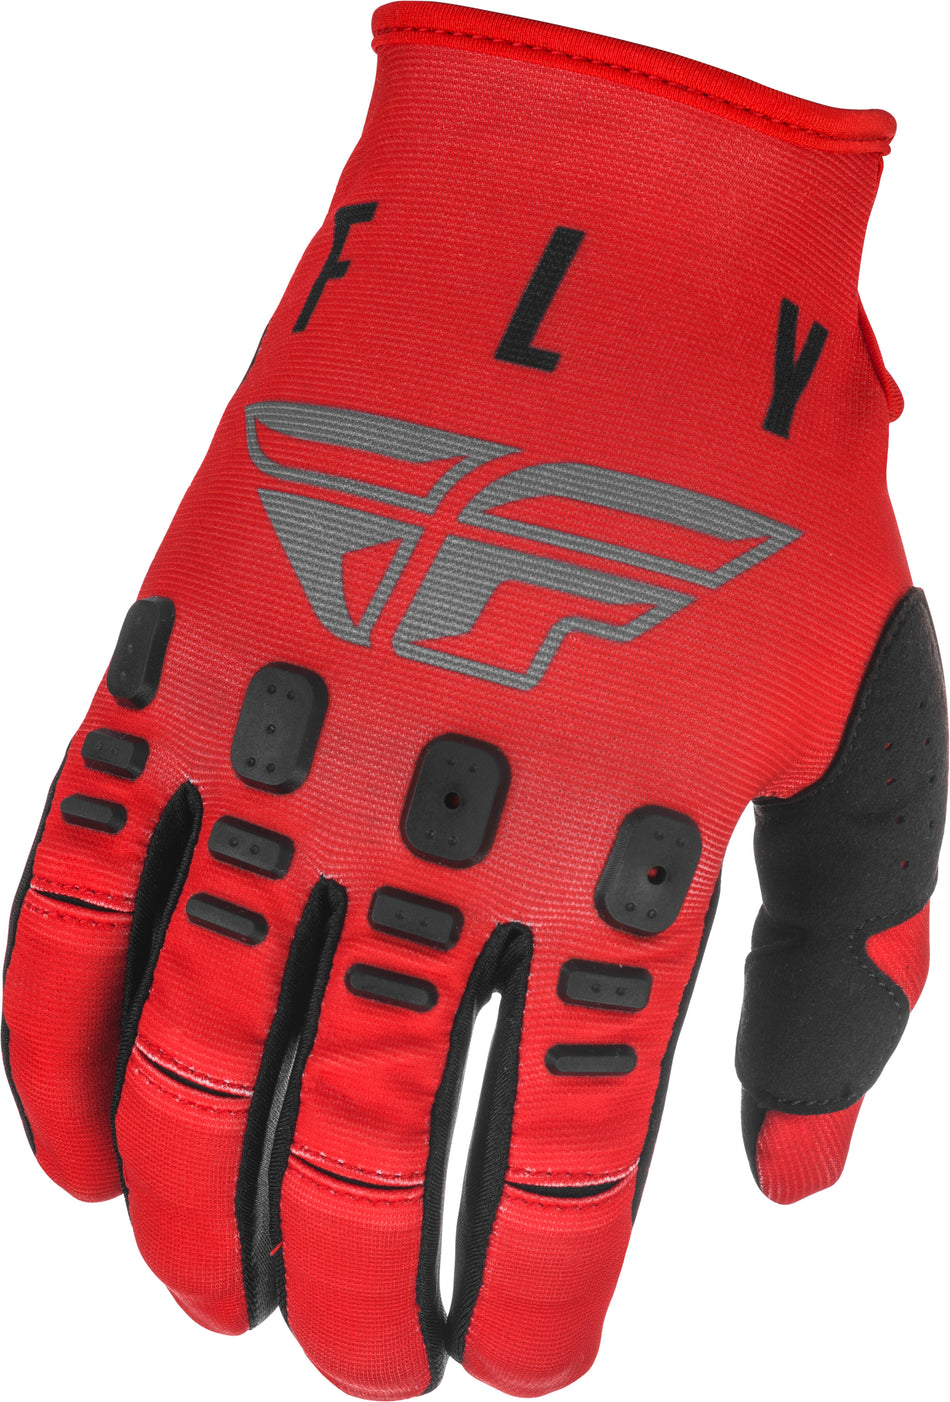 FLY RACING Kinetic K121 Gloves Red/Grey/Black Sz 13 374-41213